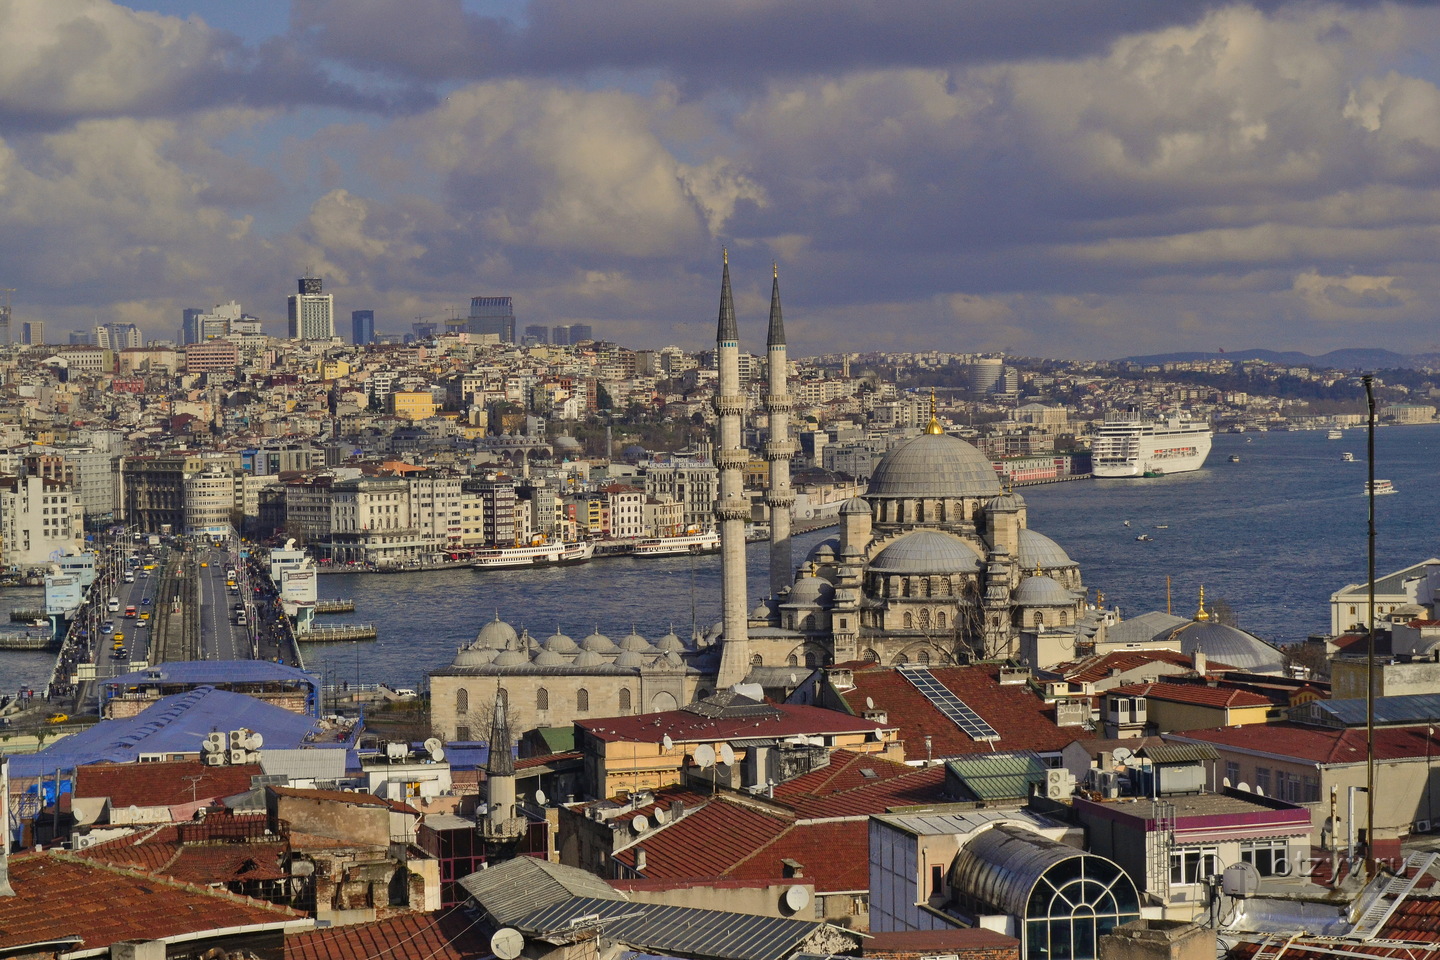 Стамбул колоритный город